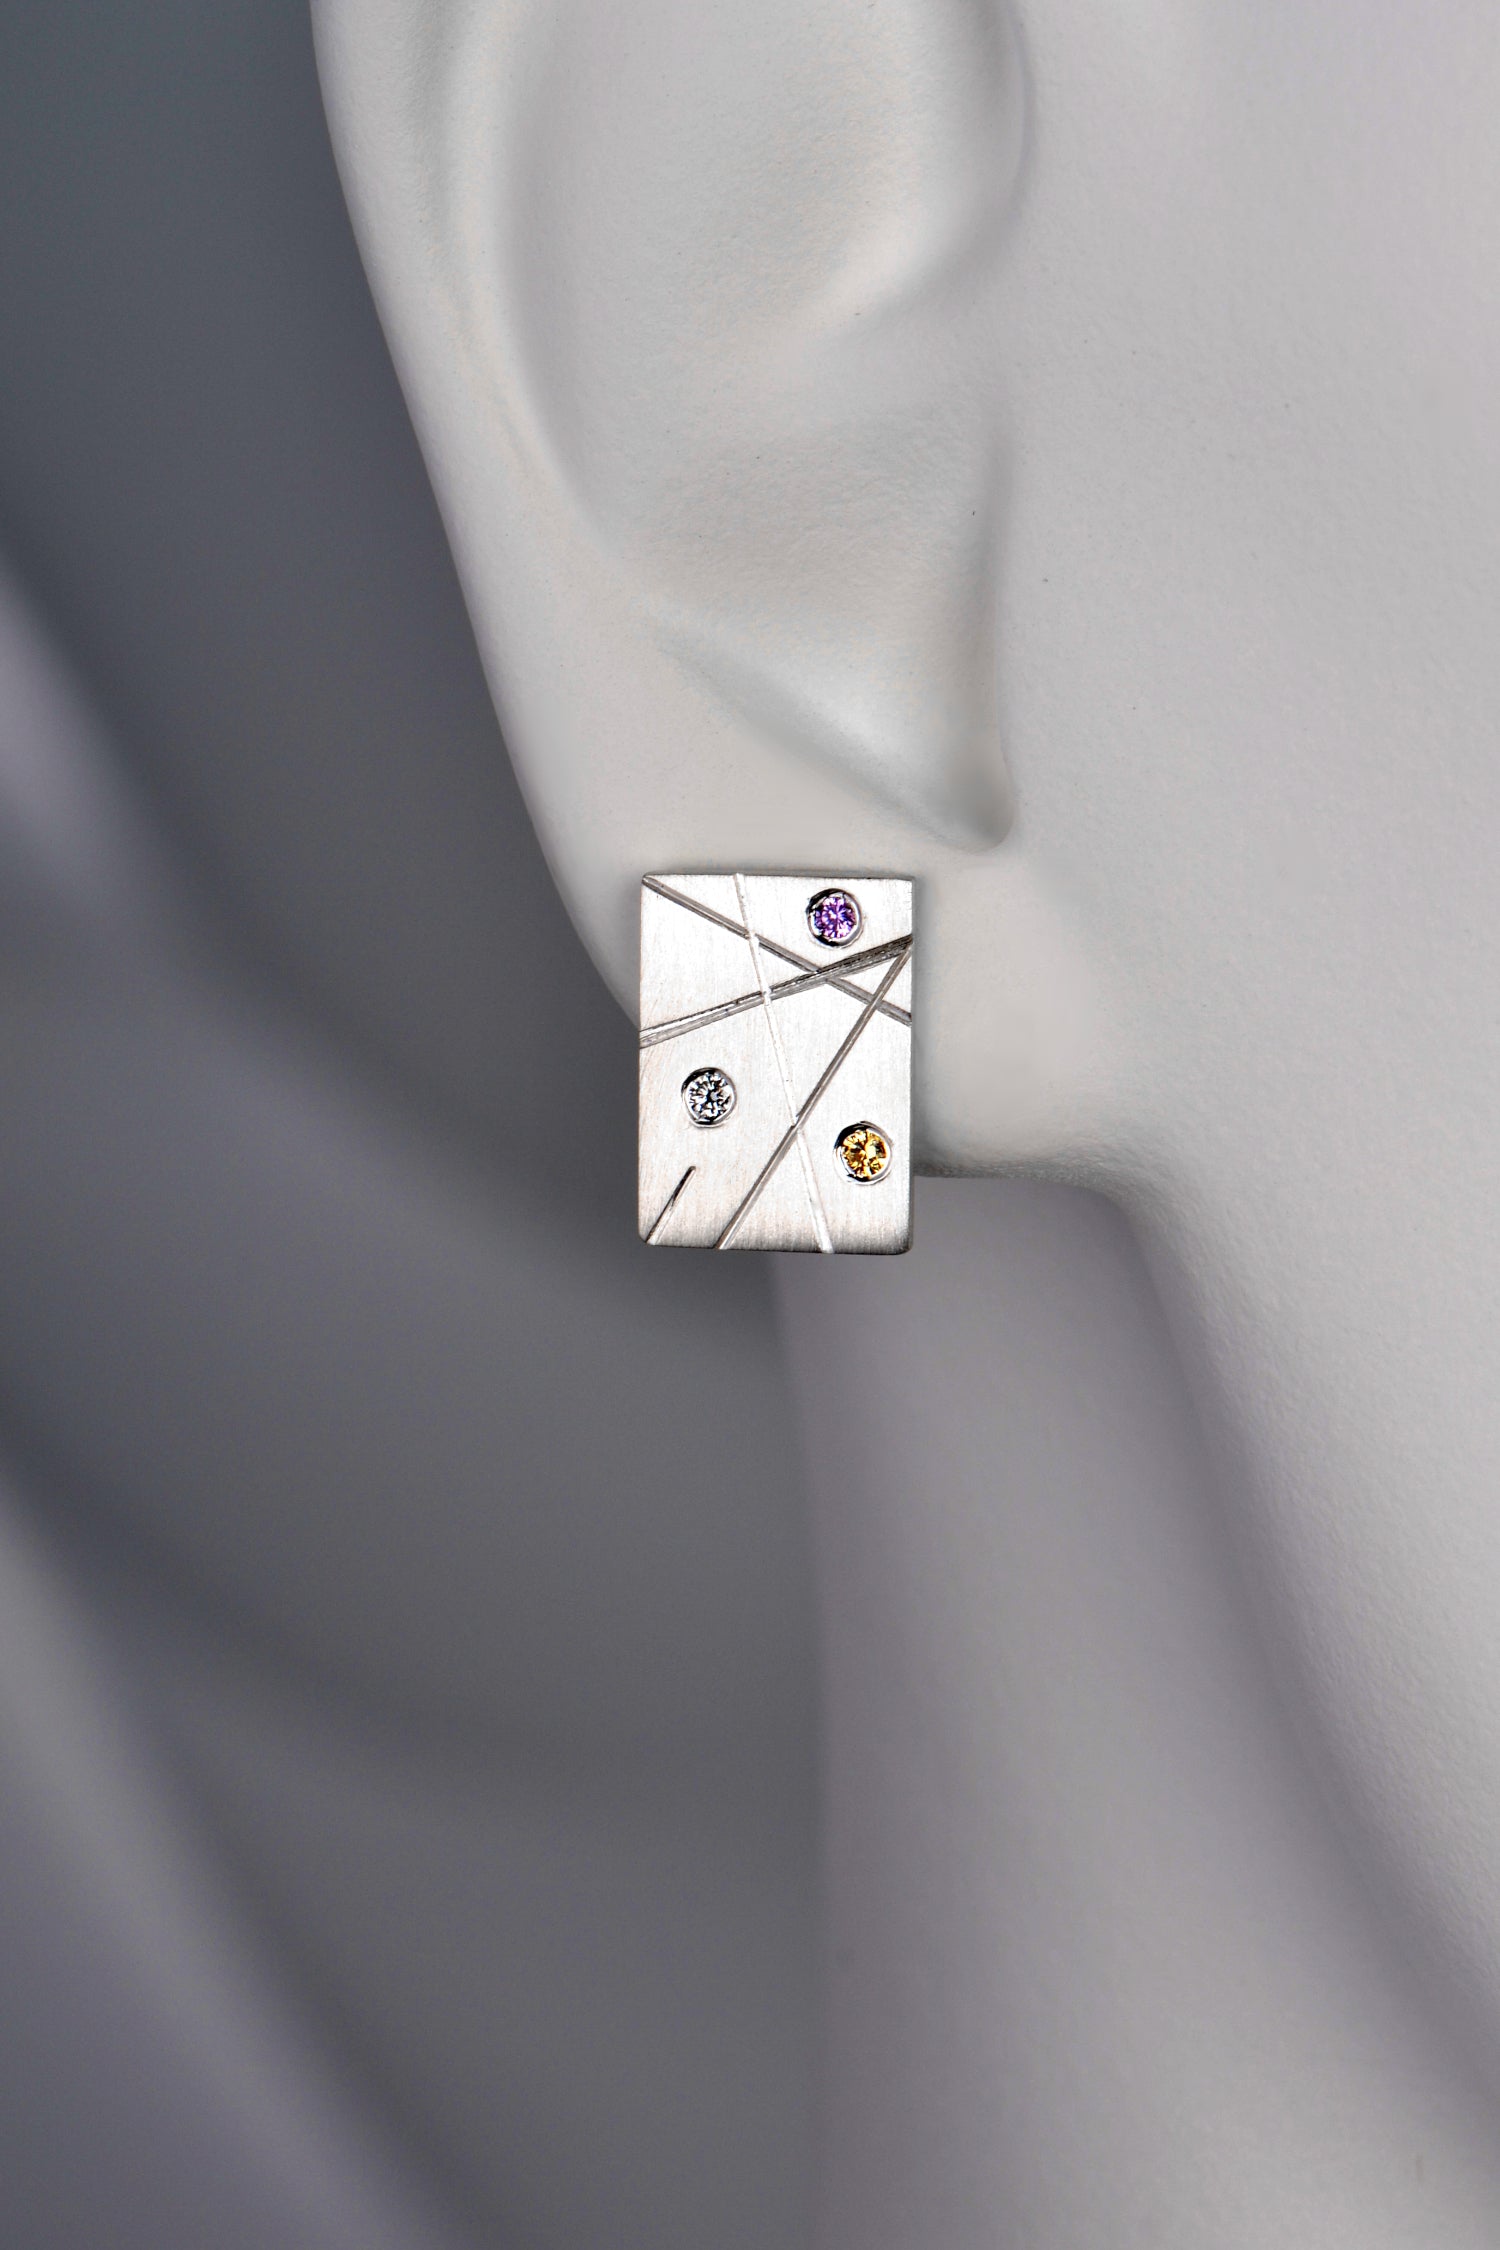 silver rectangular stud earring set with multi coloured gemstones